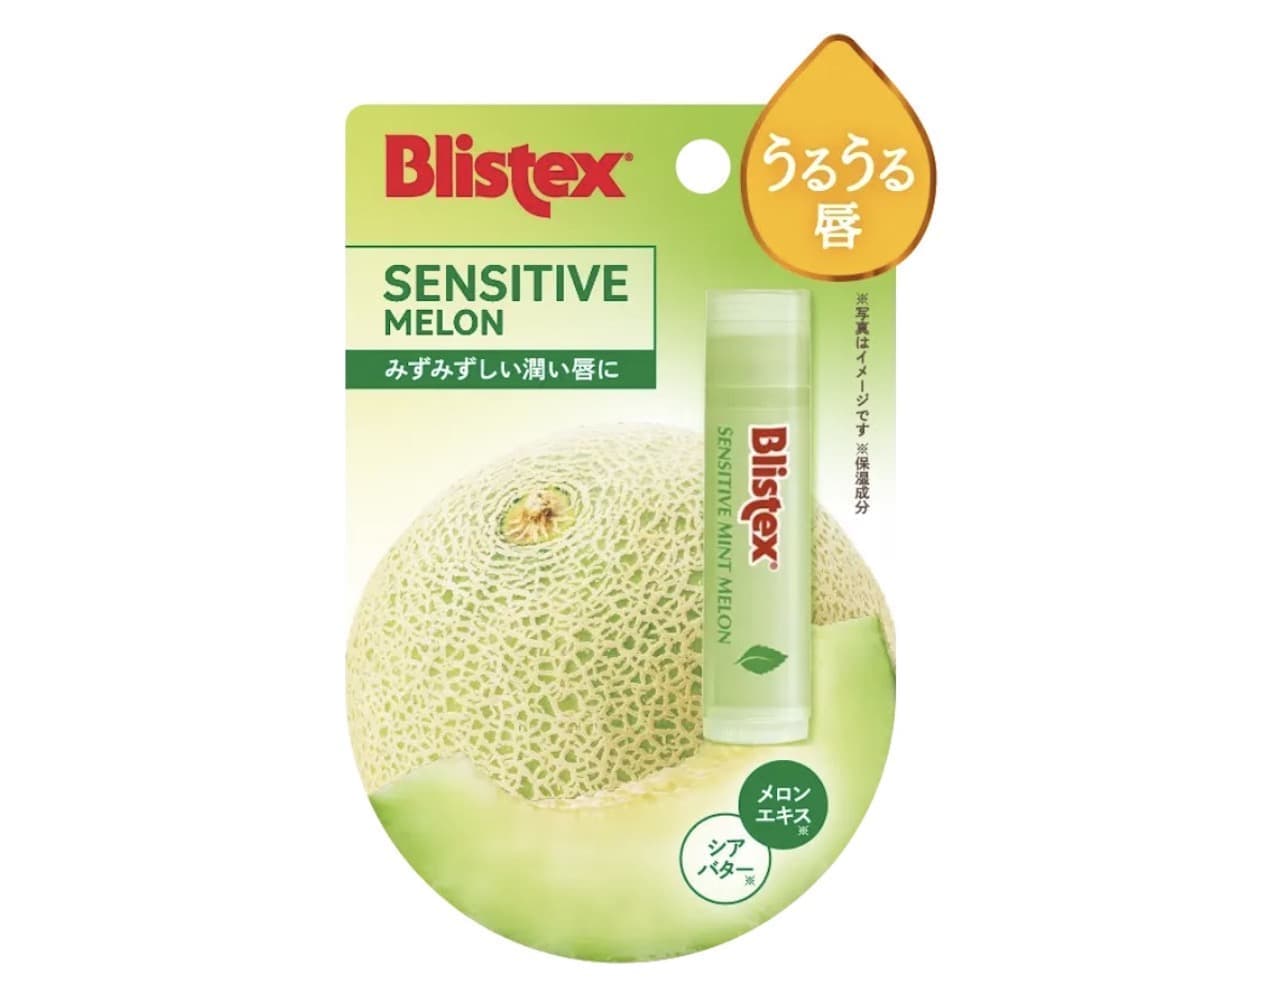 Lip balm "Blistex Sensitive Melon